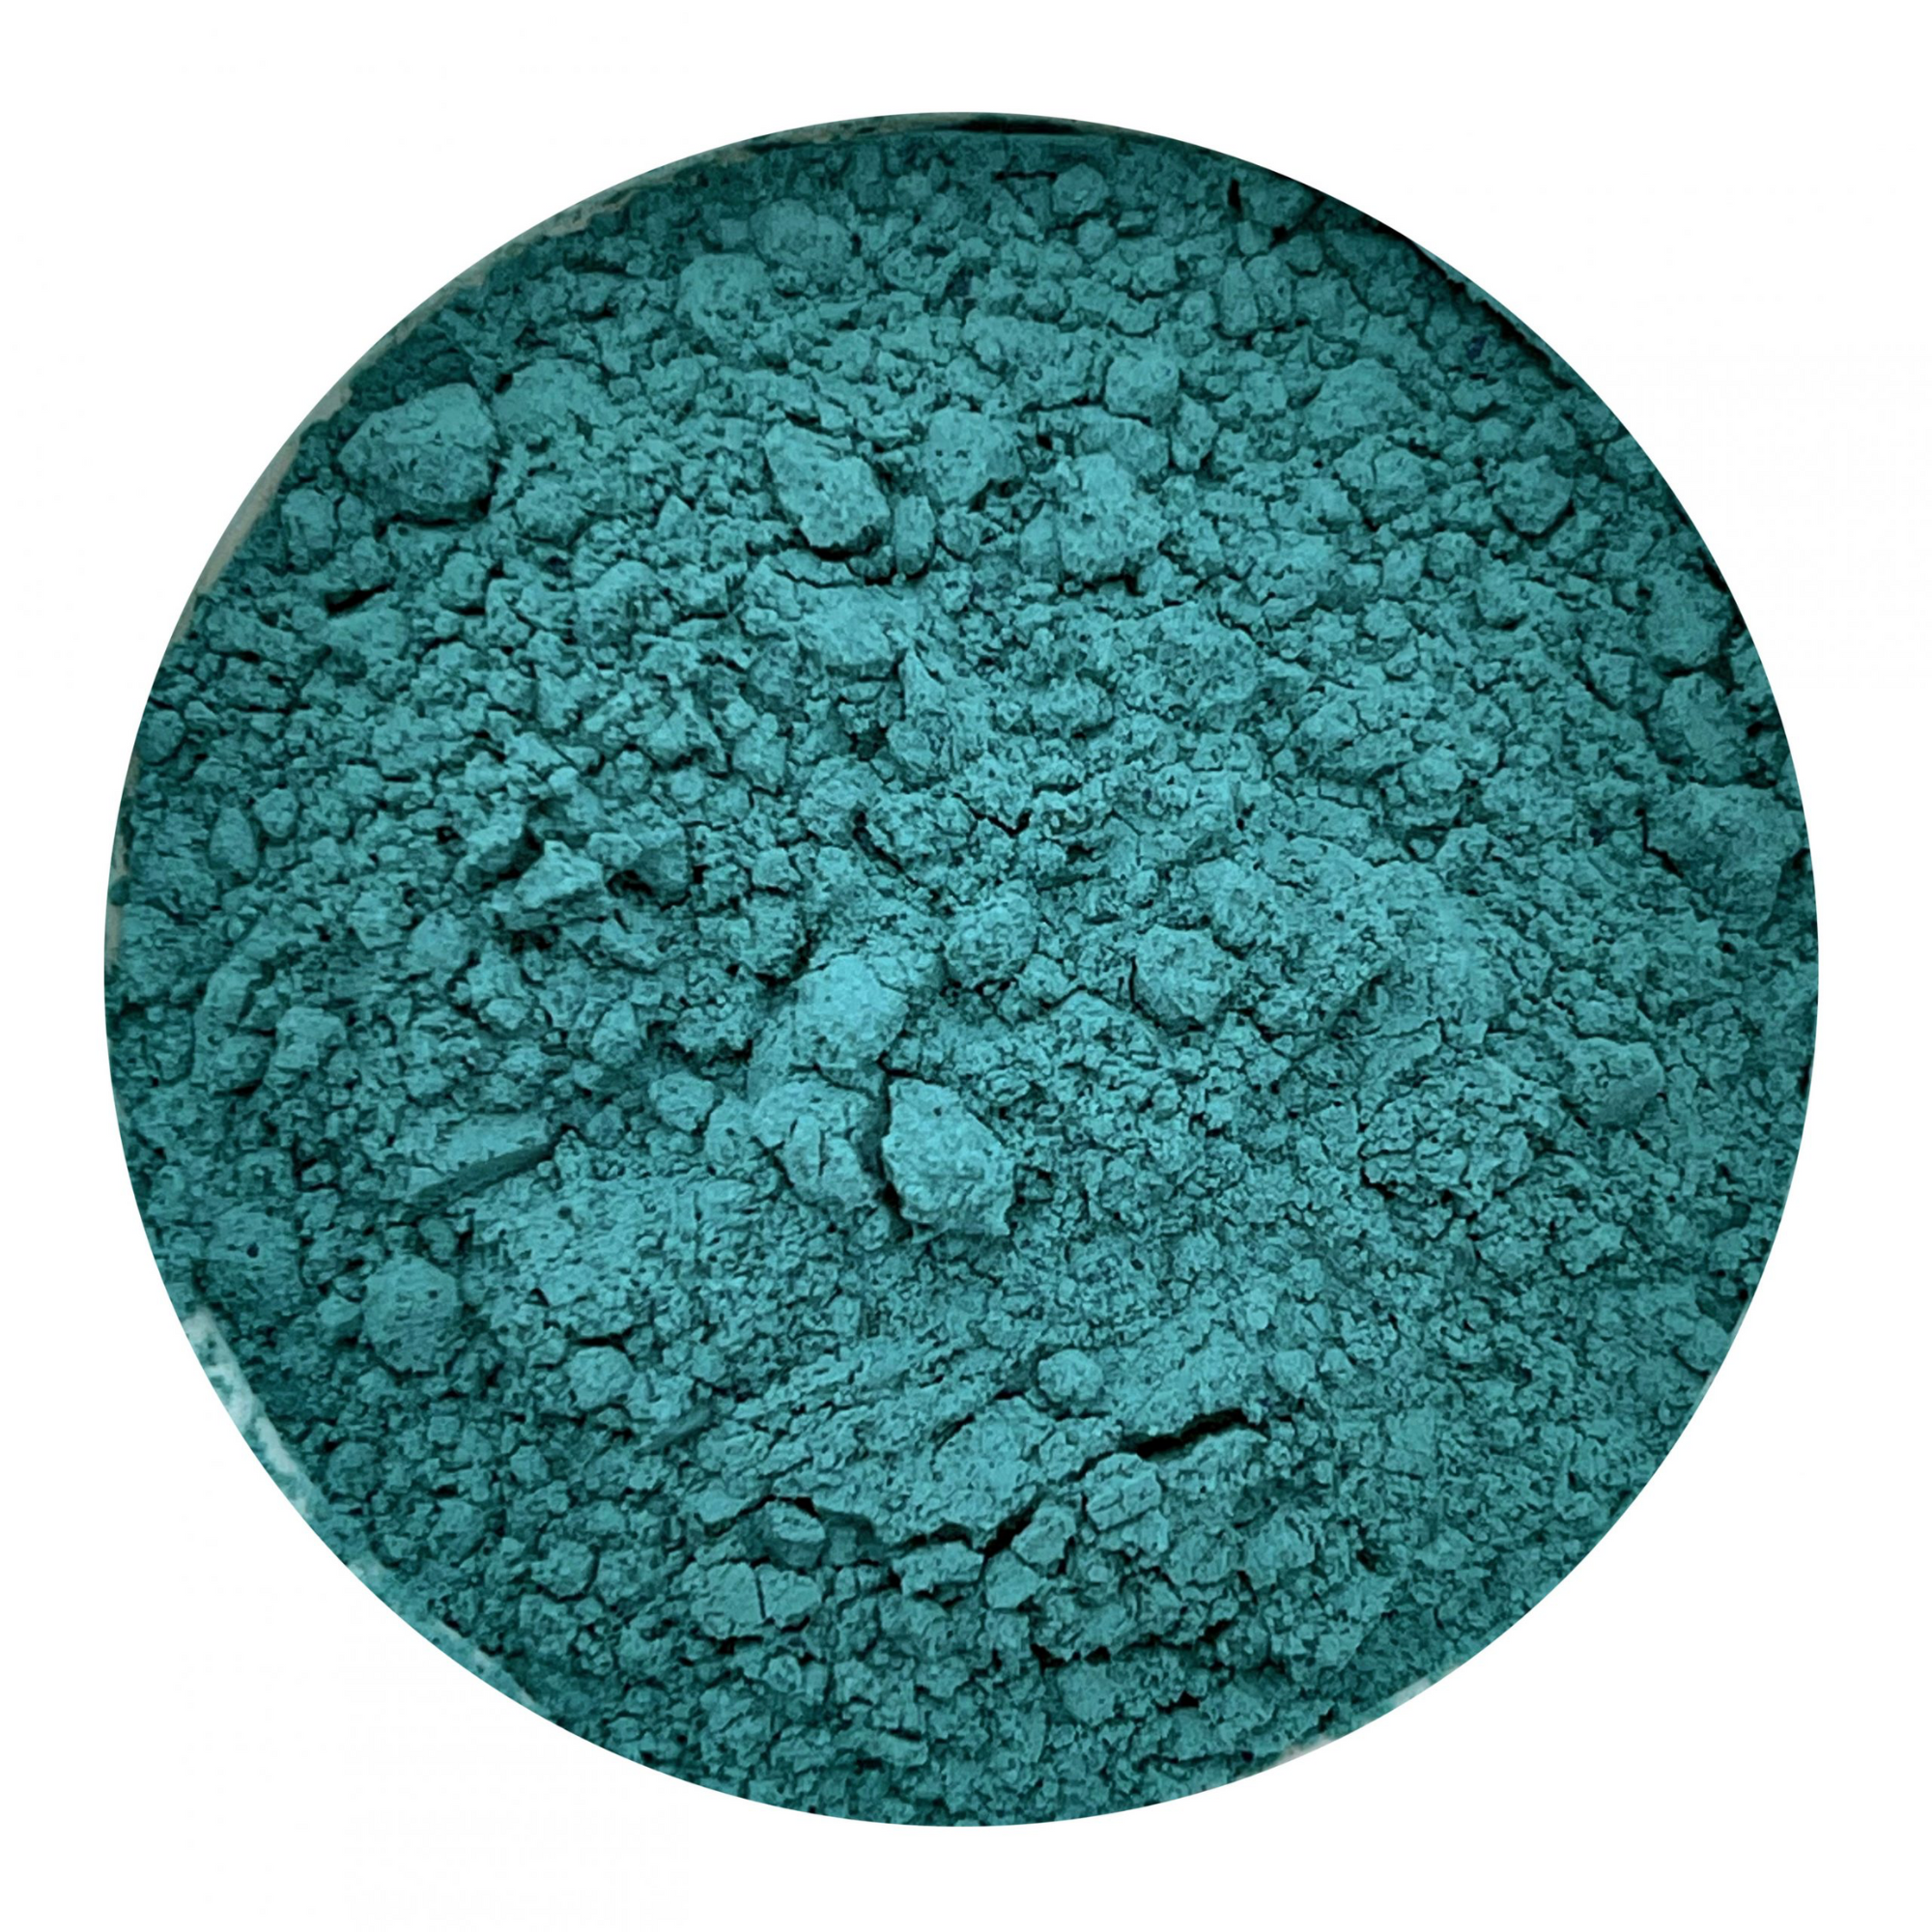 Powercolor Powder Pigment Turquoise 40ml